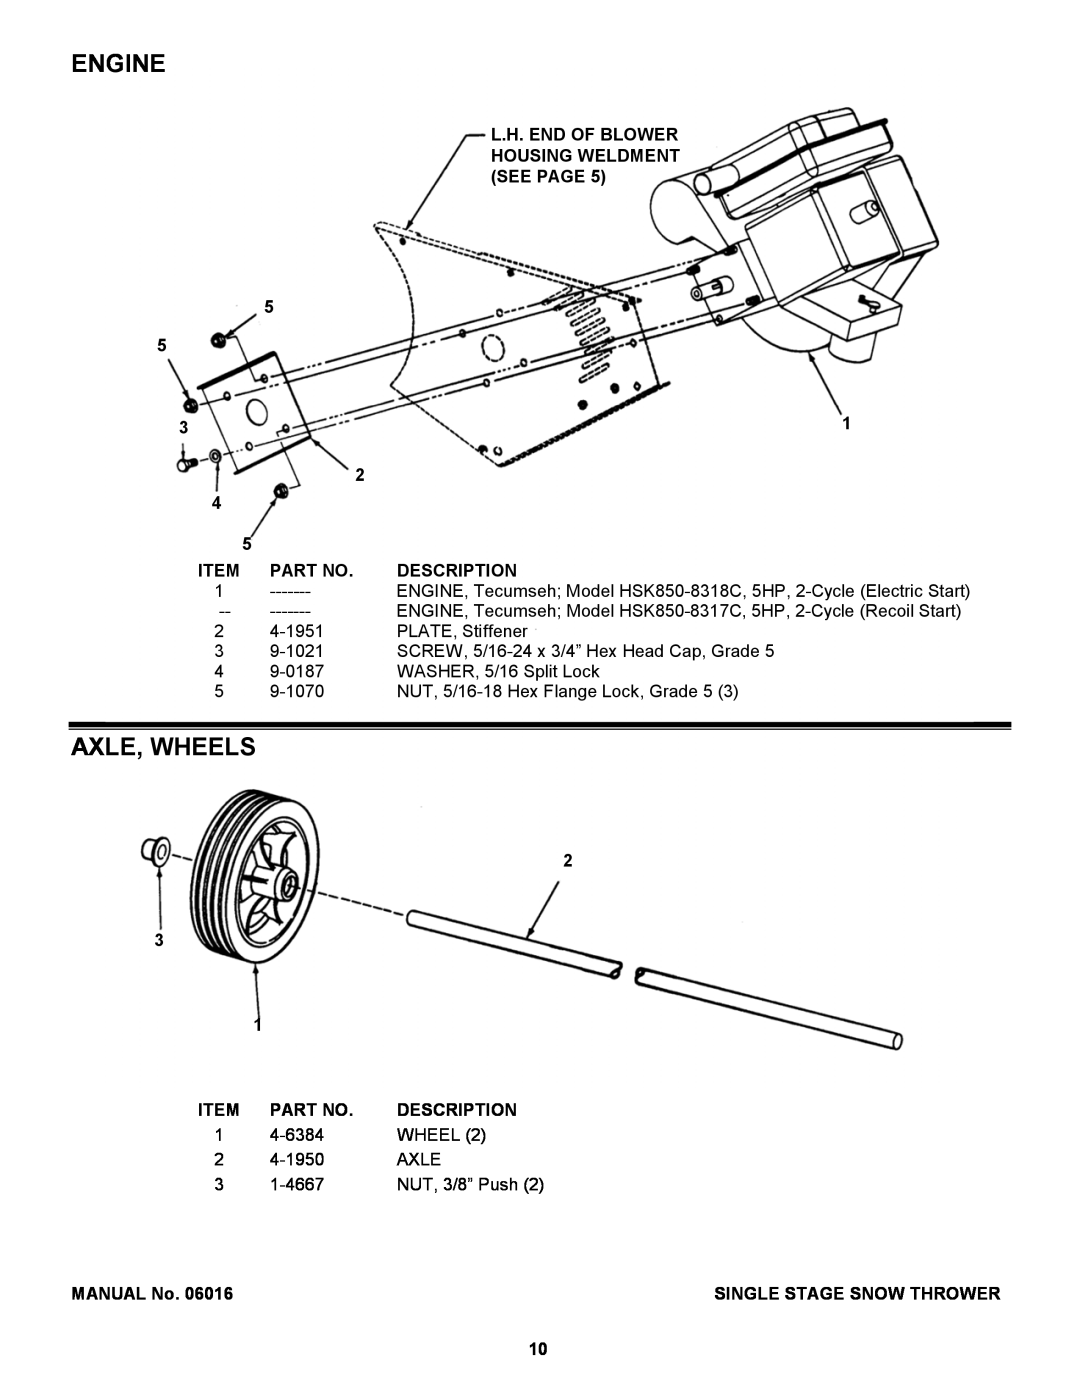 Snapper SX5200R, SX5200E manual Engine, Axle, Wheels, L.H. End Of Blower Housing Weldment See Page, Description, MANUAL No 